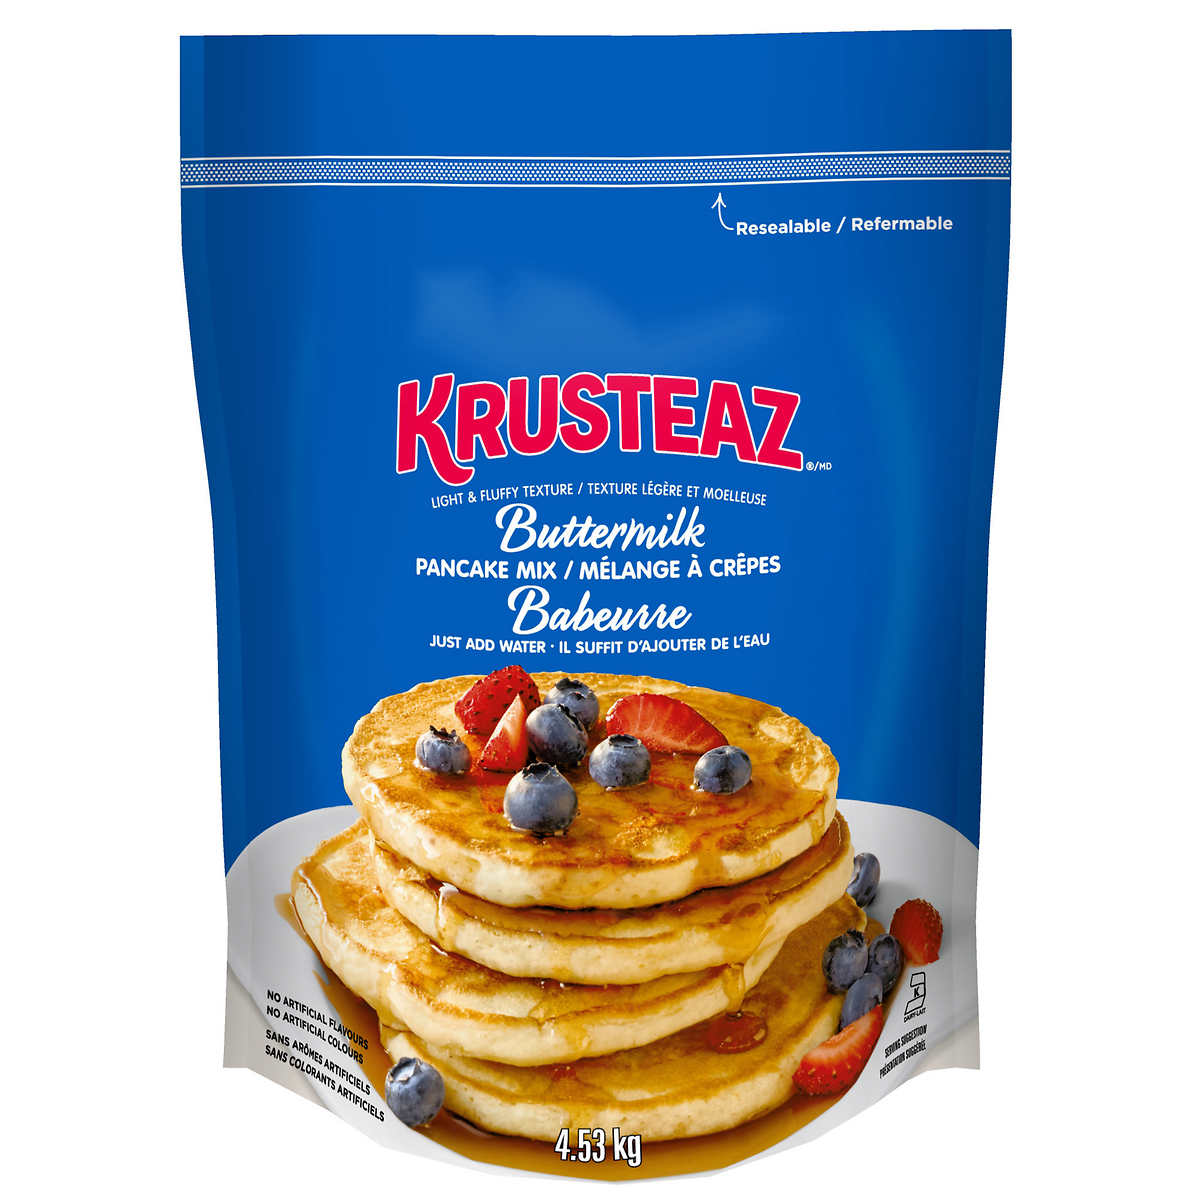 Krusteaz Pancake Mix Buttermilk 4 53 Kg Costco.